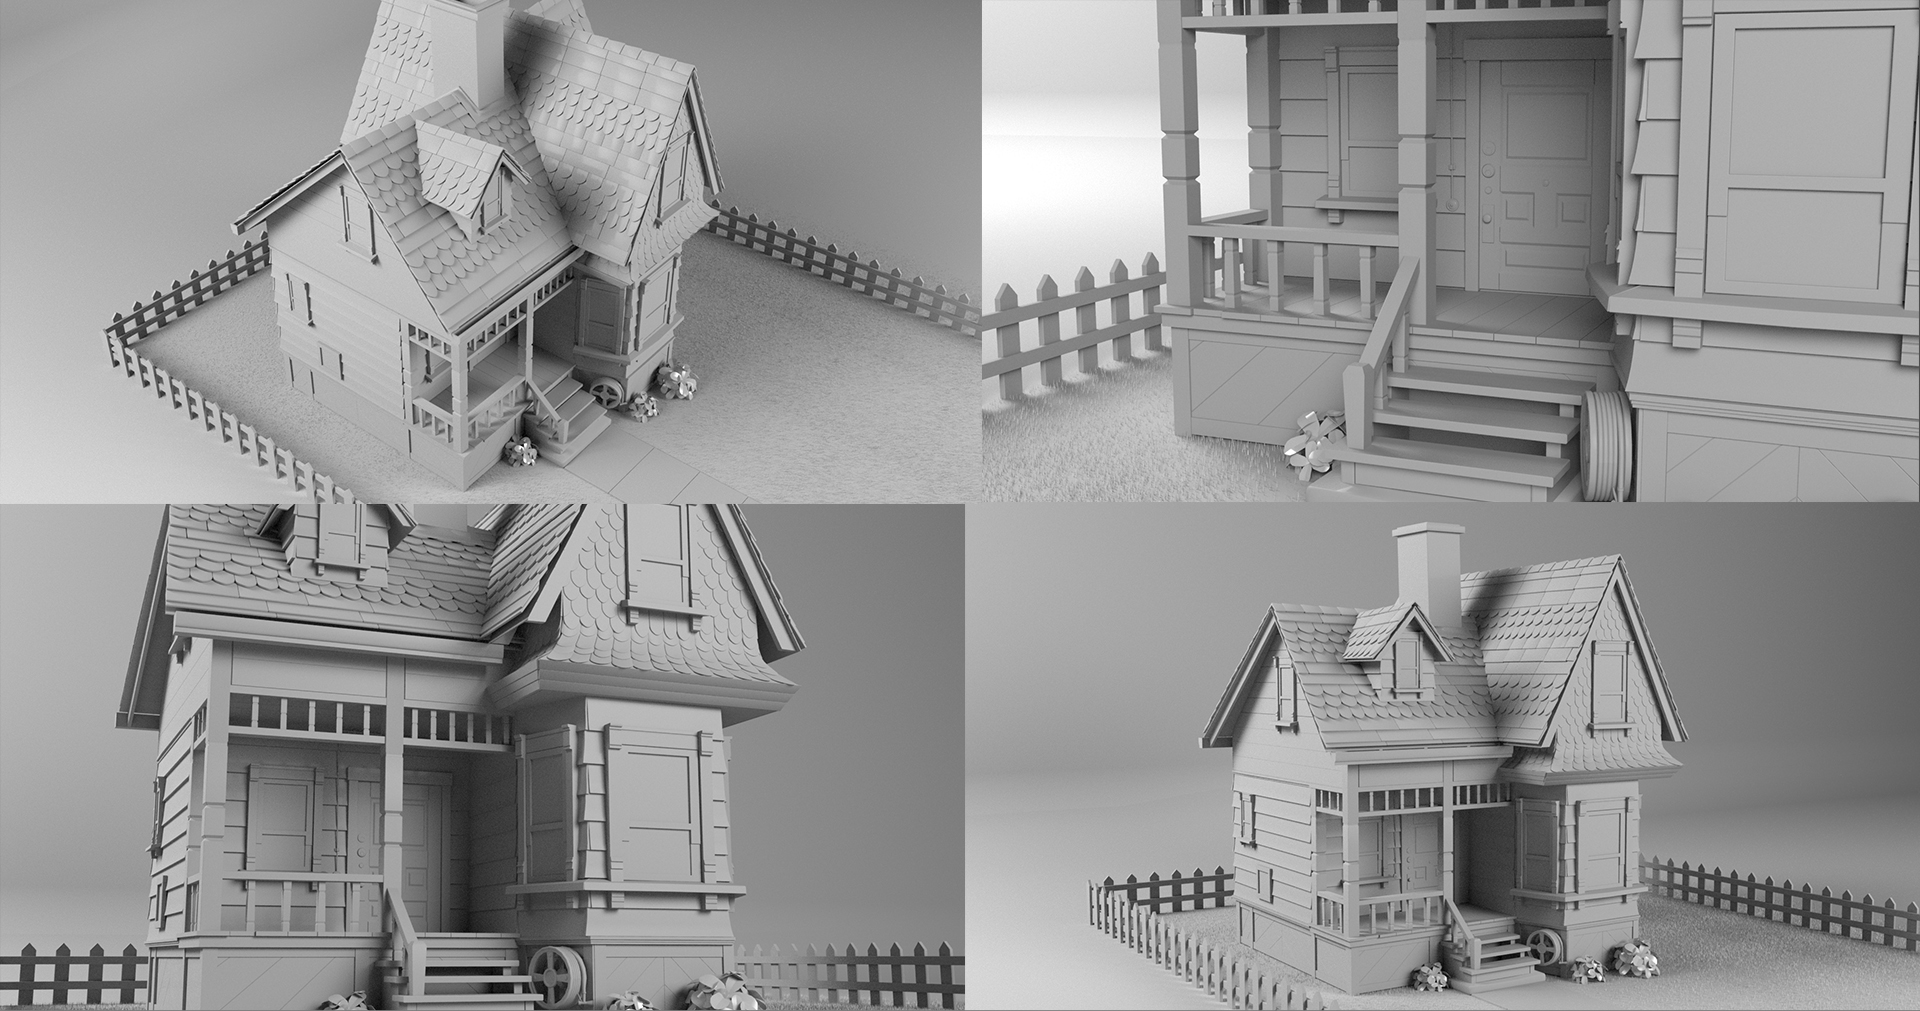 Blender: Pixar's Up house - 3D model by raya.creates (@raya.creates)  [e20688b]